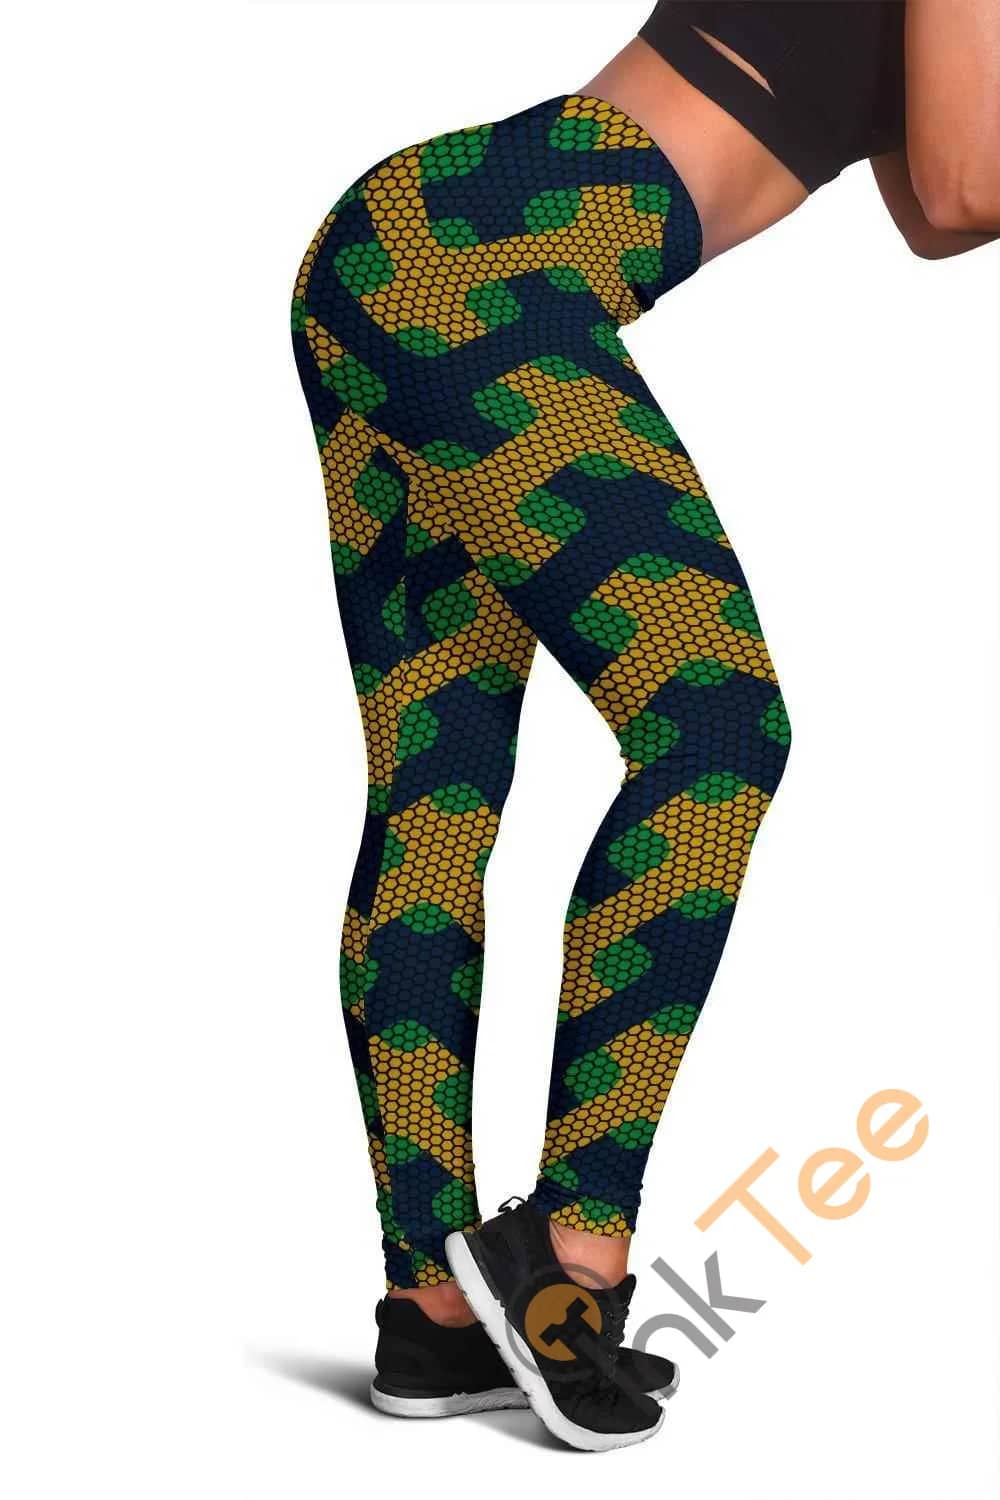 Notre Dame Fighting Irish Inspired Liberty Green 3D All Over Print For Yoga Fitness Fashion Women'S Leggings